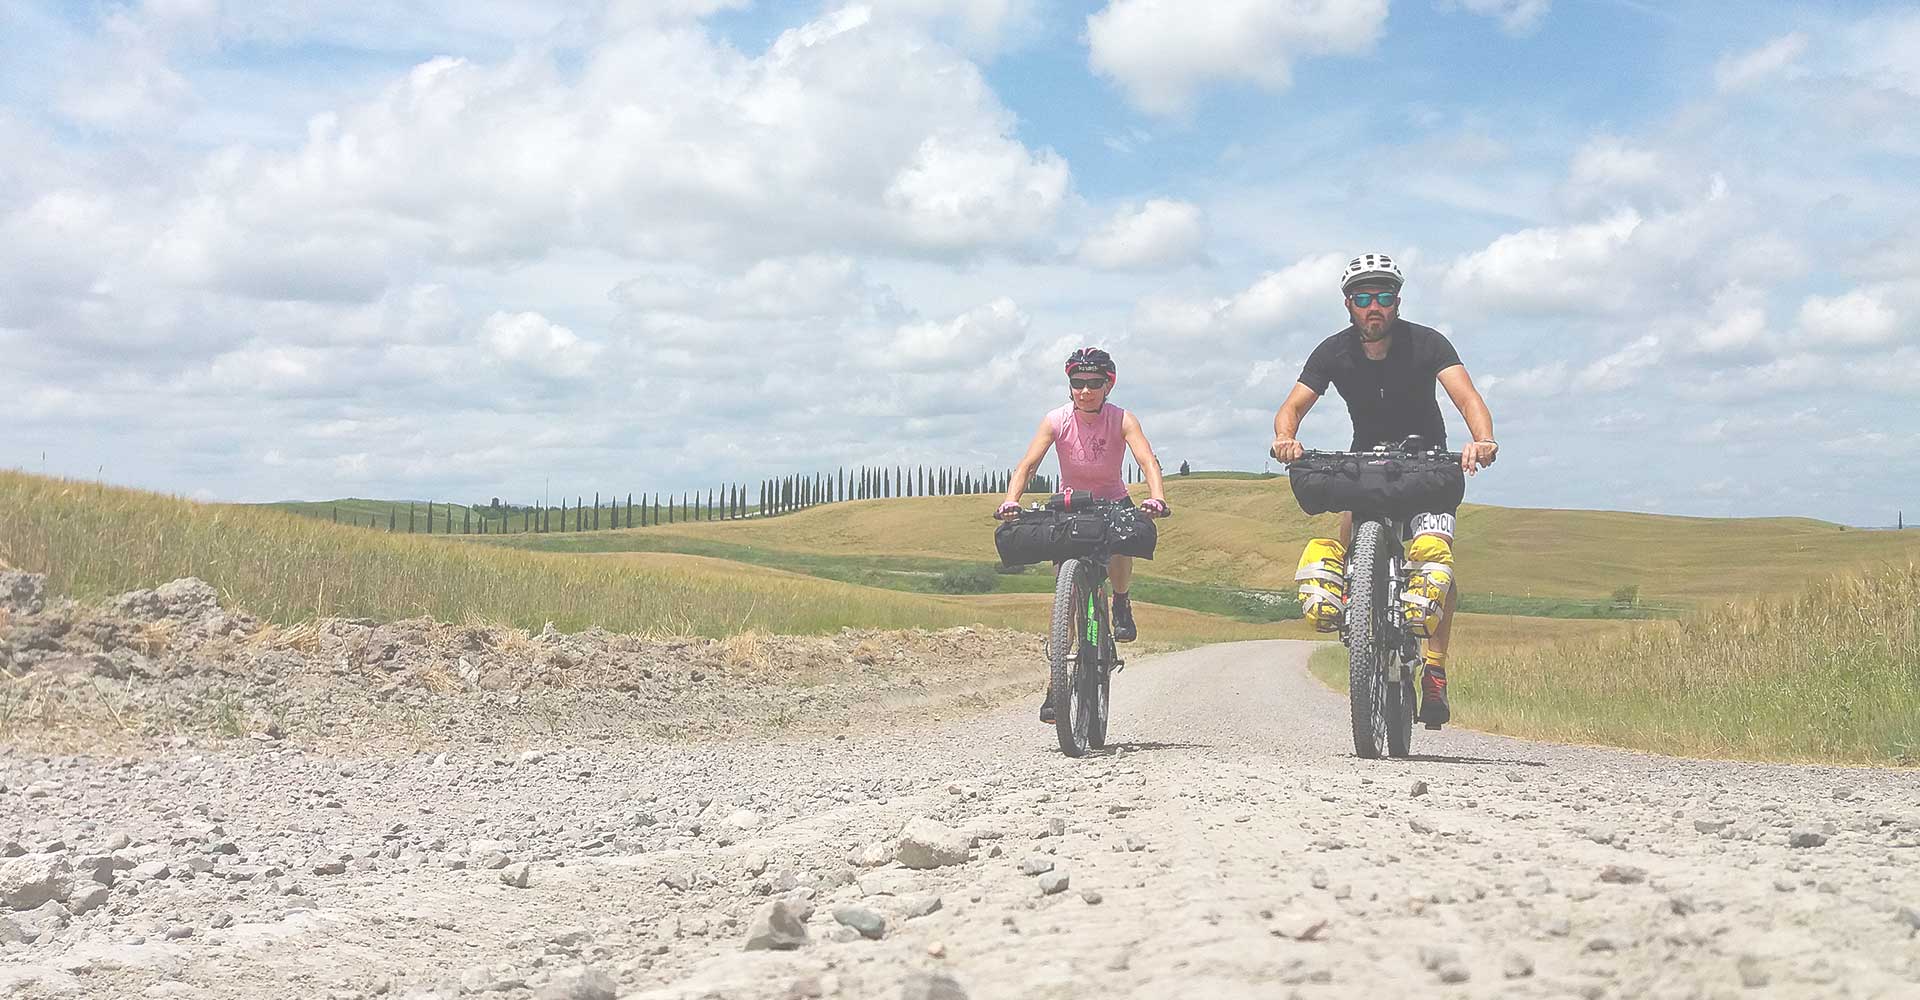 Mountain bike tour Toscana - dal Chianti alla Val d'Orcia